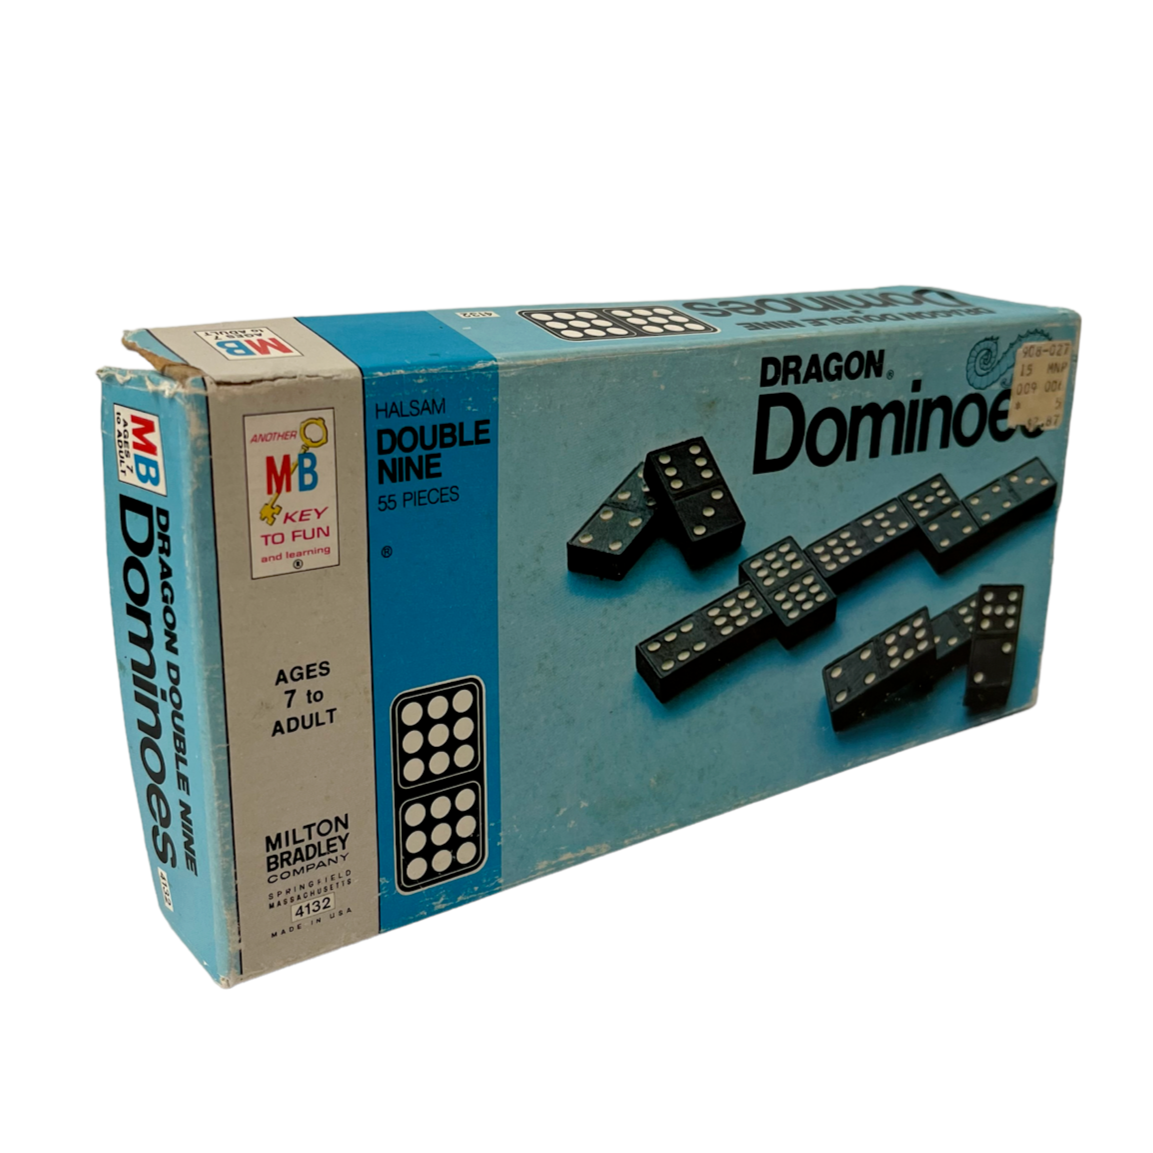 Dragon Halsam Double Nine Dominoes By Milton Bradley Vintage 1970 Missing 1 Tile - $11.72